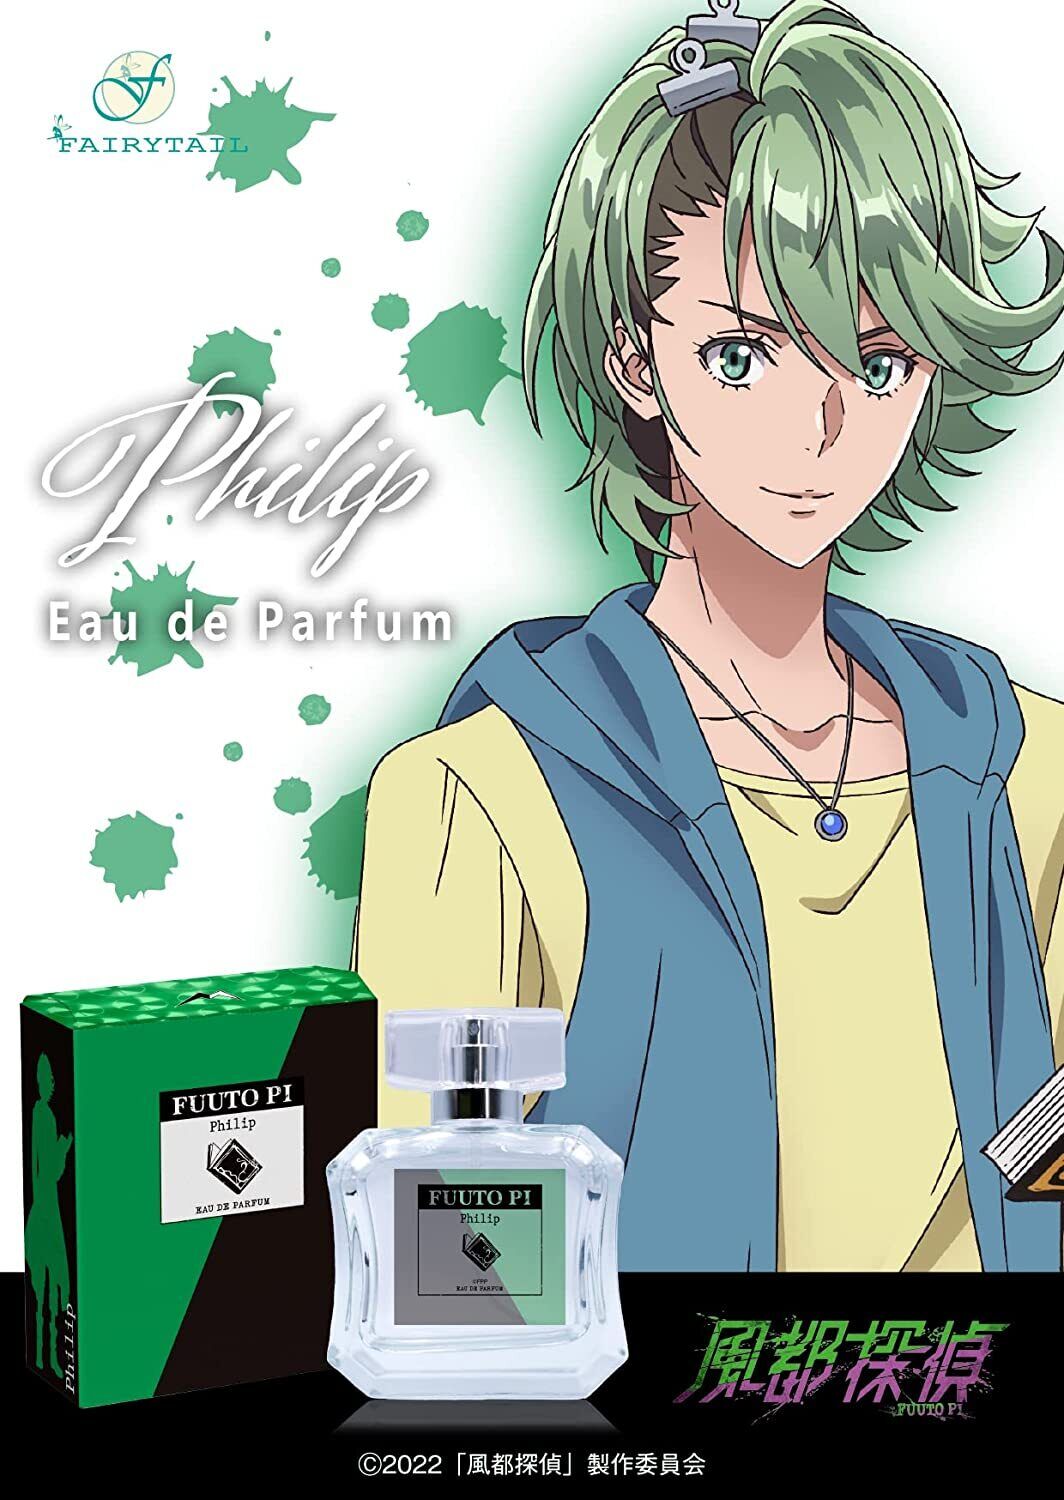 Rider W Fuuto PI Philip Fragrance Perfume 50ml Limited Cosplay